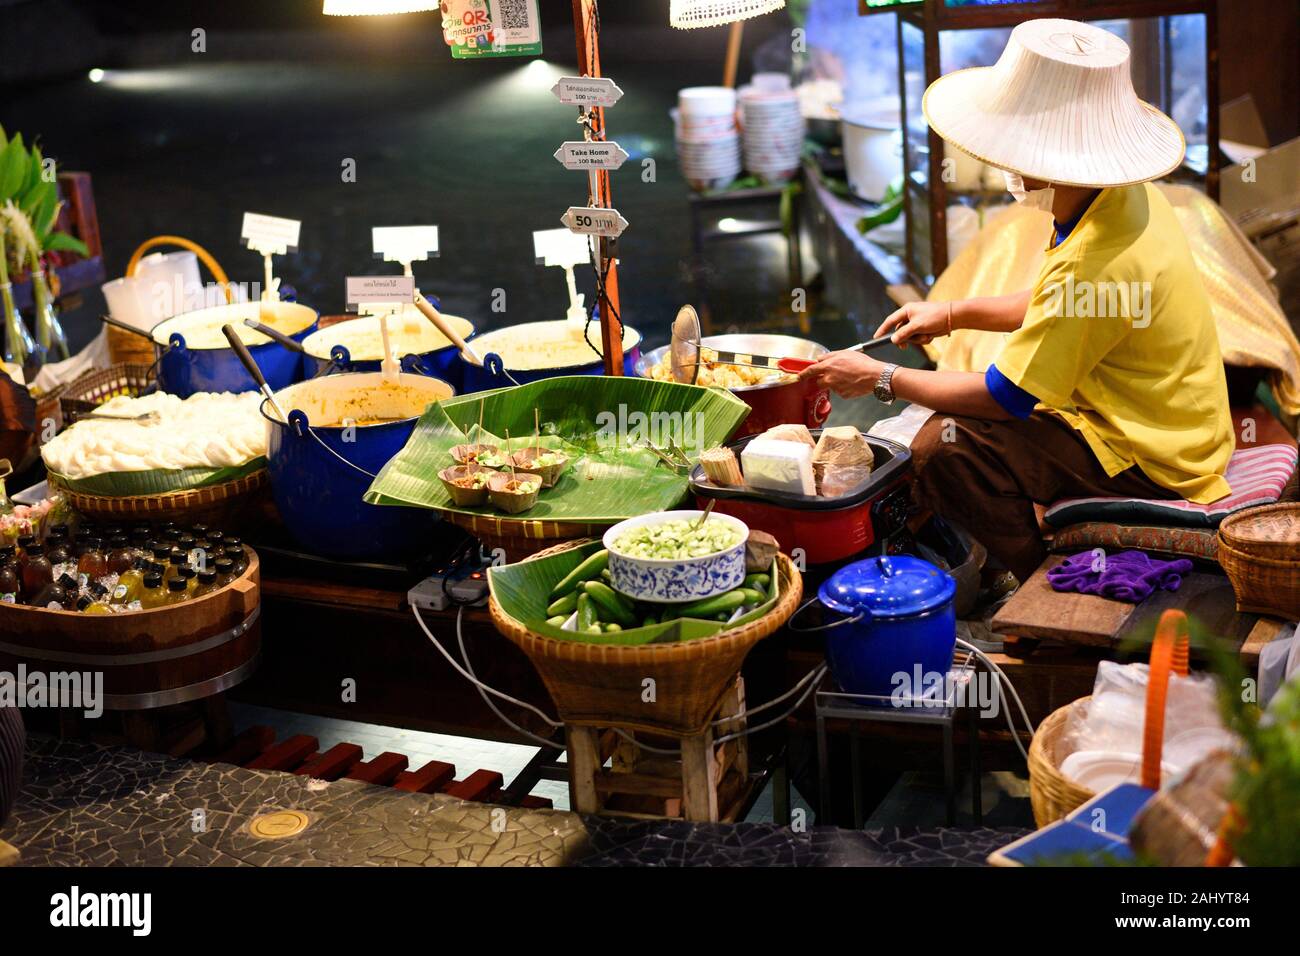 IconSiam shopping mall food court, Khlong San District, Thonburi, Bangkok,  Thailand Stock Photo - Alamy